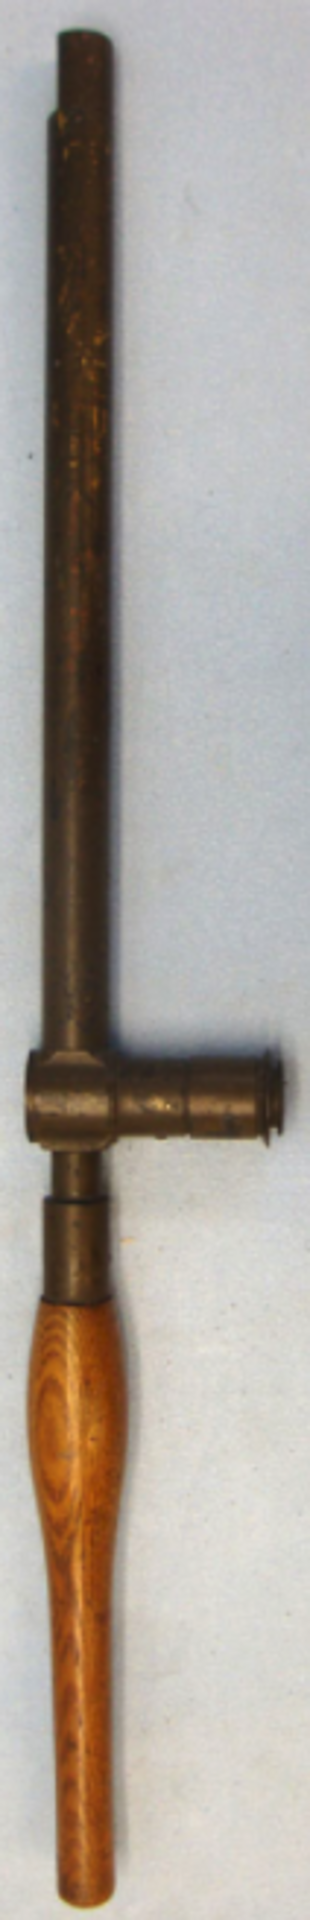 British WW1 1918 MK IX Brass Trench Periscope By R & J Beck Ltd With Screw off Wood Handle.   An